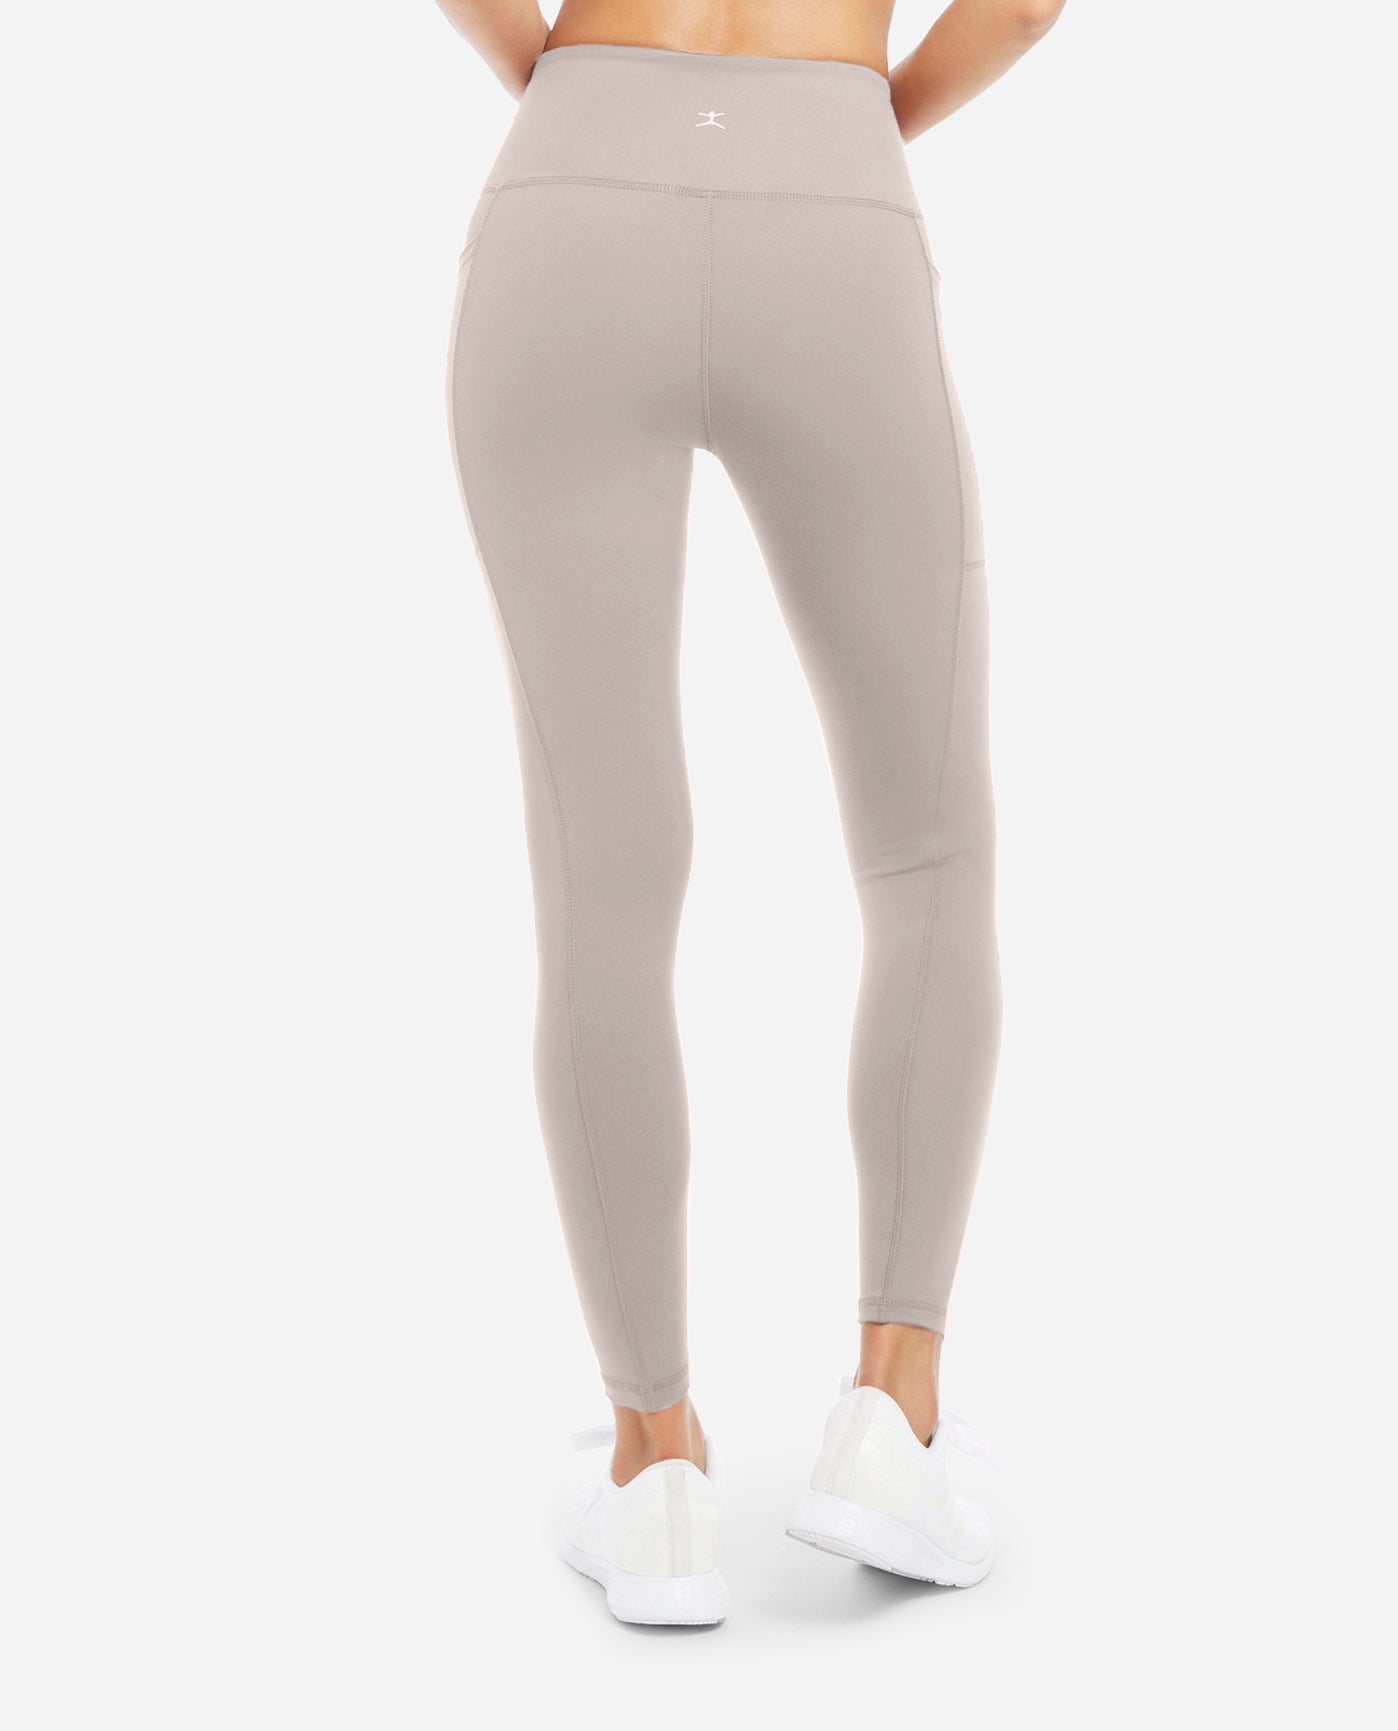 Danskin Women's Ultra High Legging Tight with Pockets,Variety